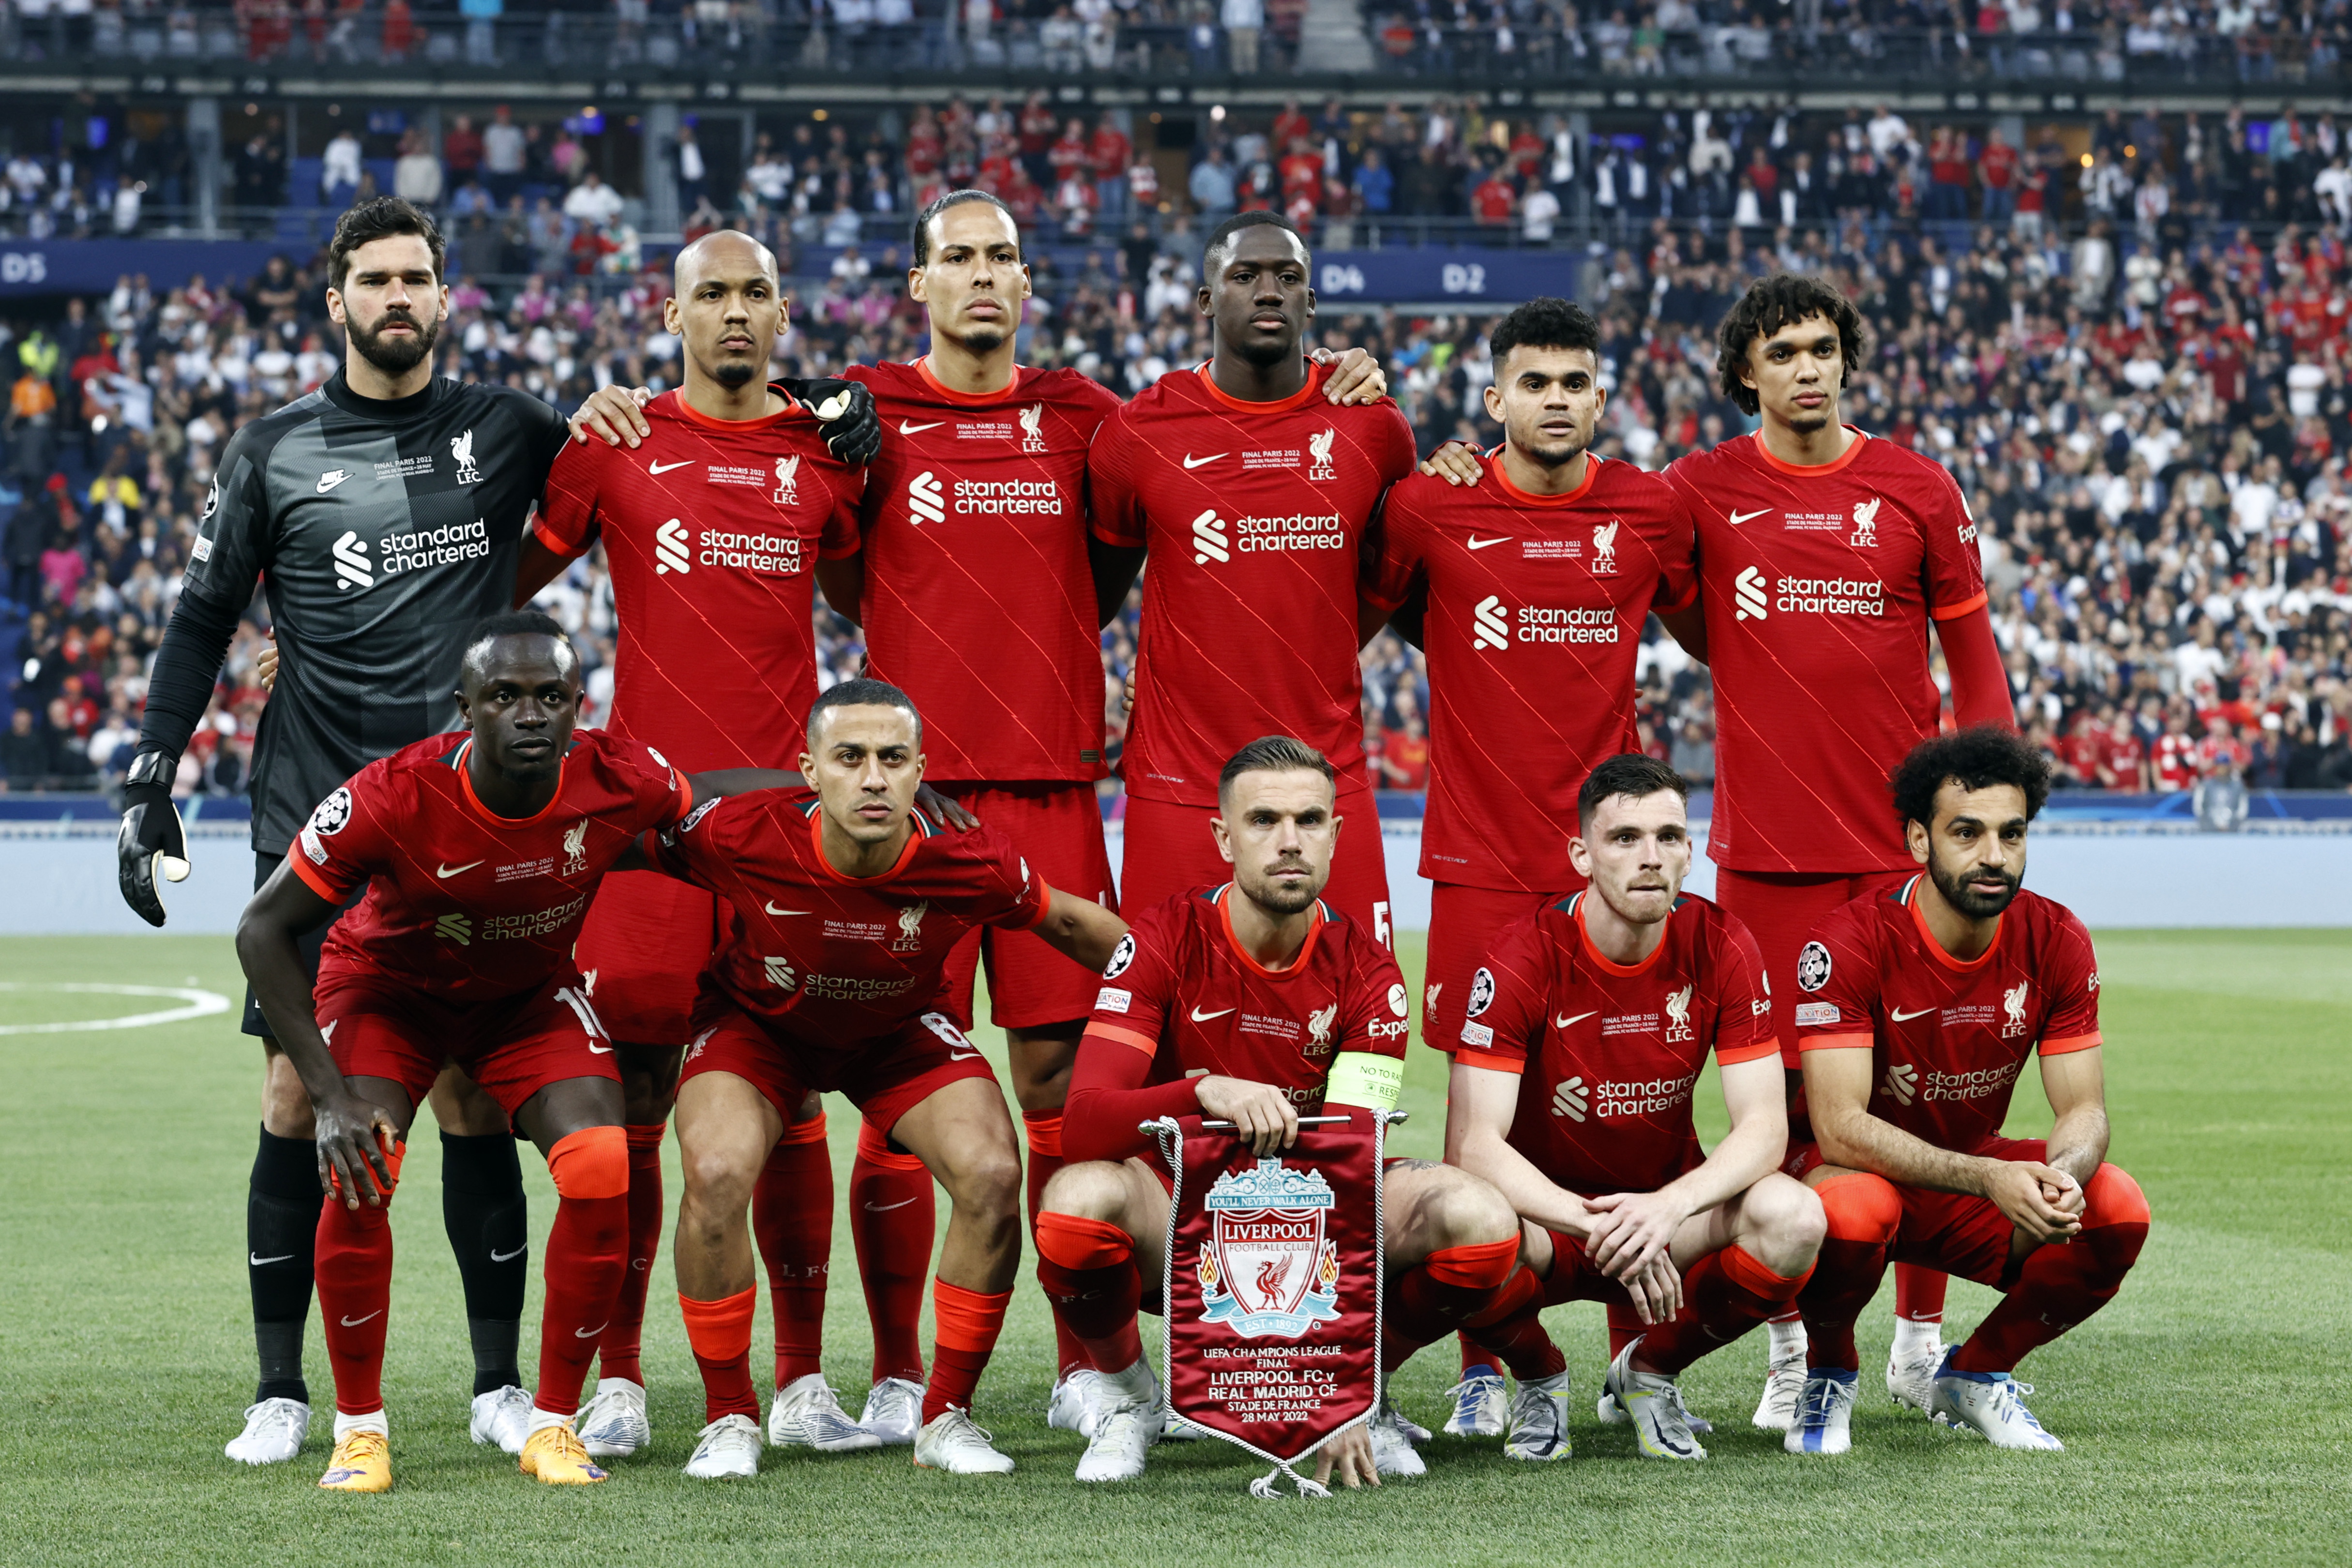 UEFA Champions League final”Liverpool FC v Real Madrid”